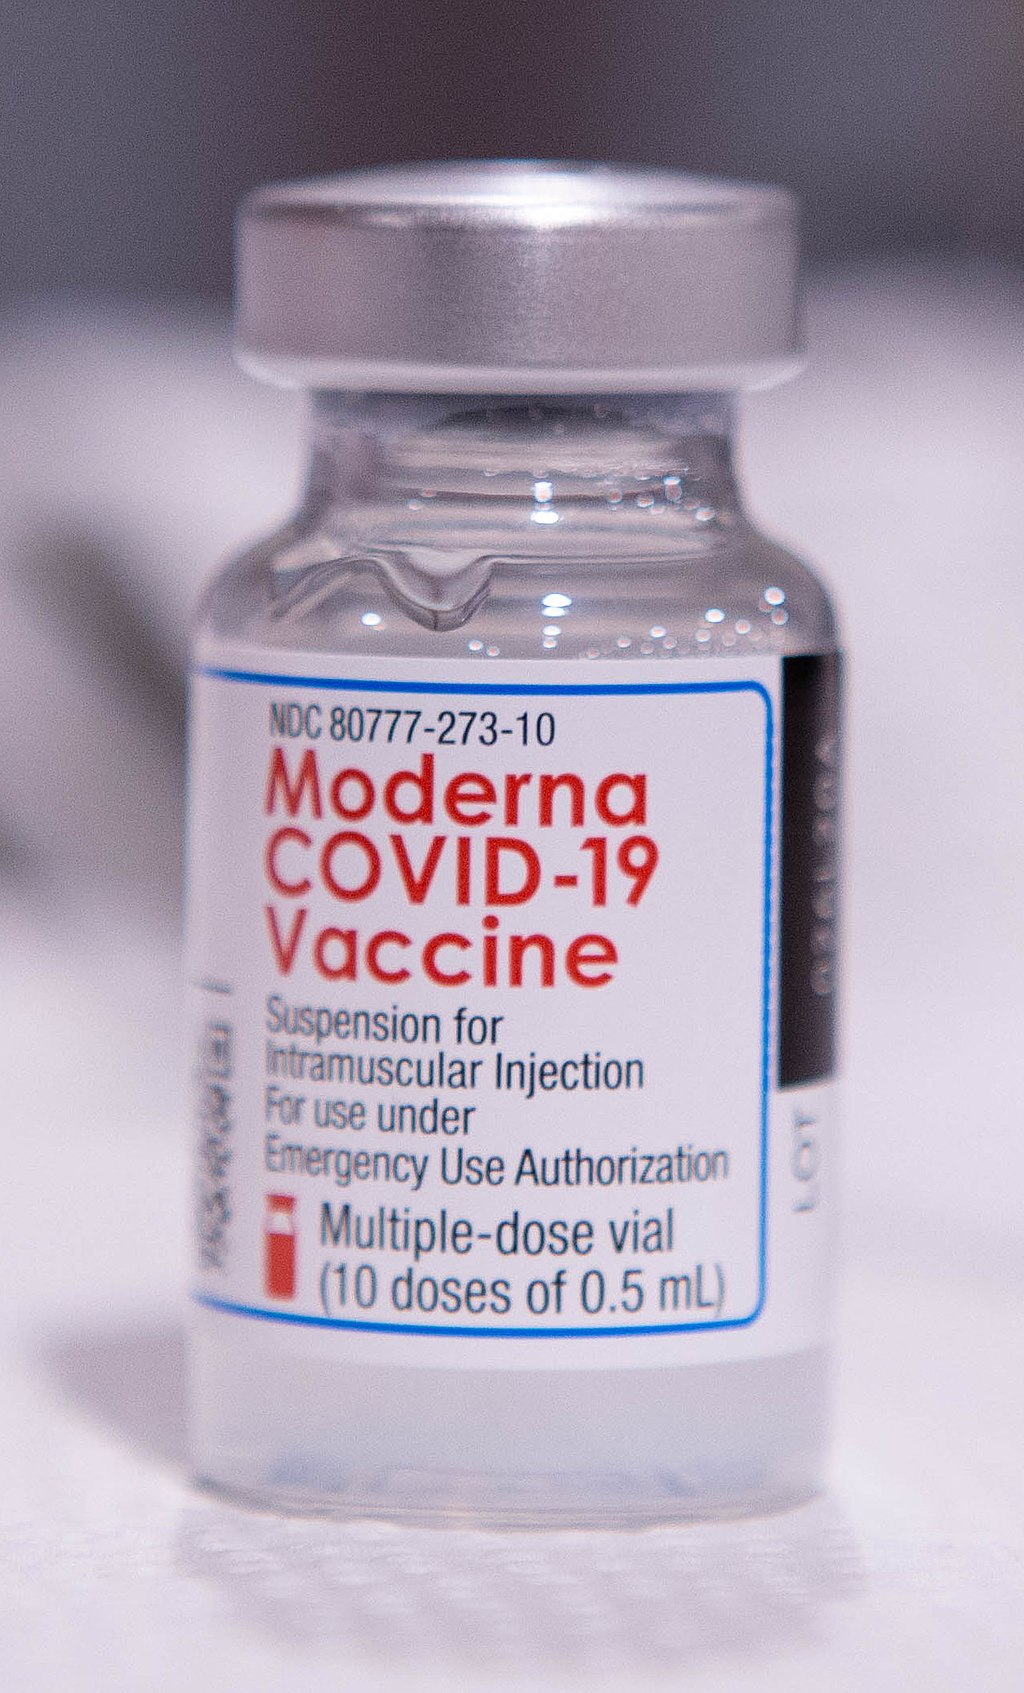 Moderna vax